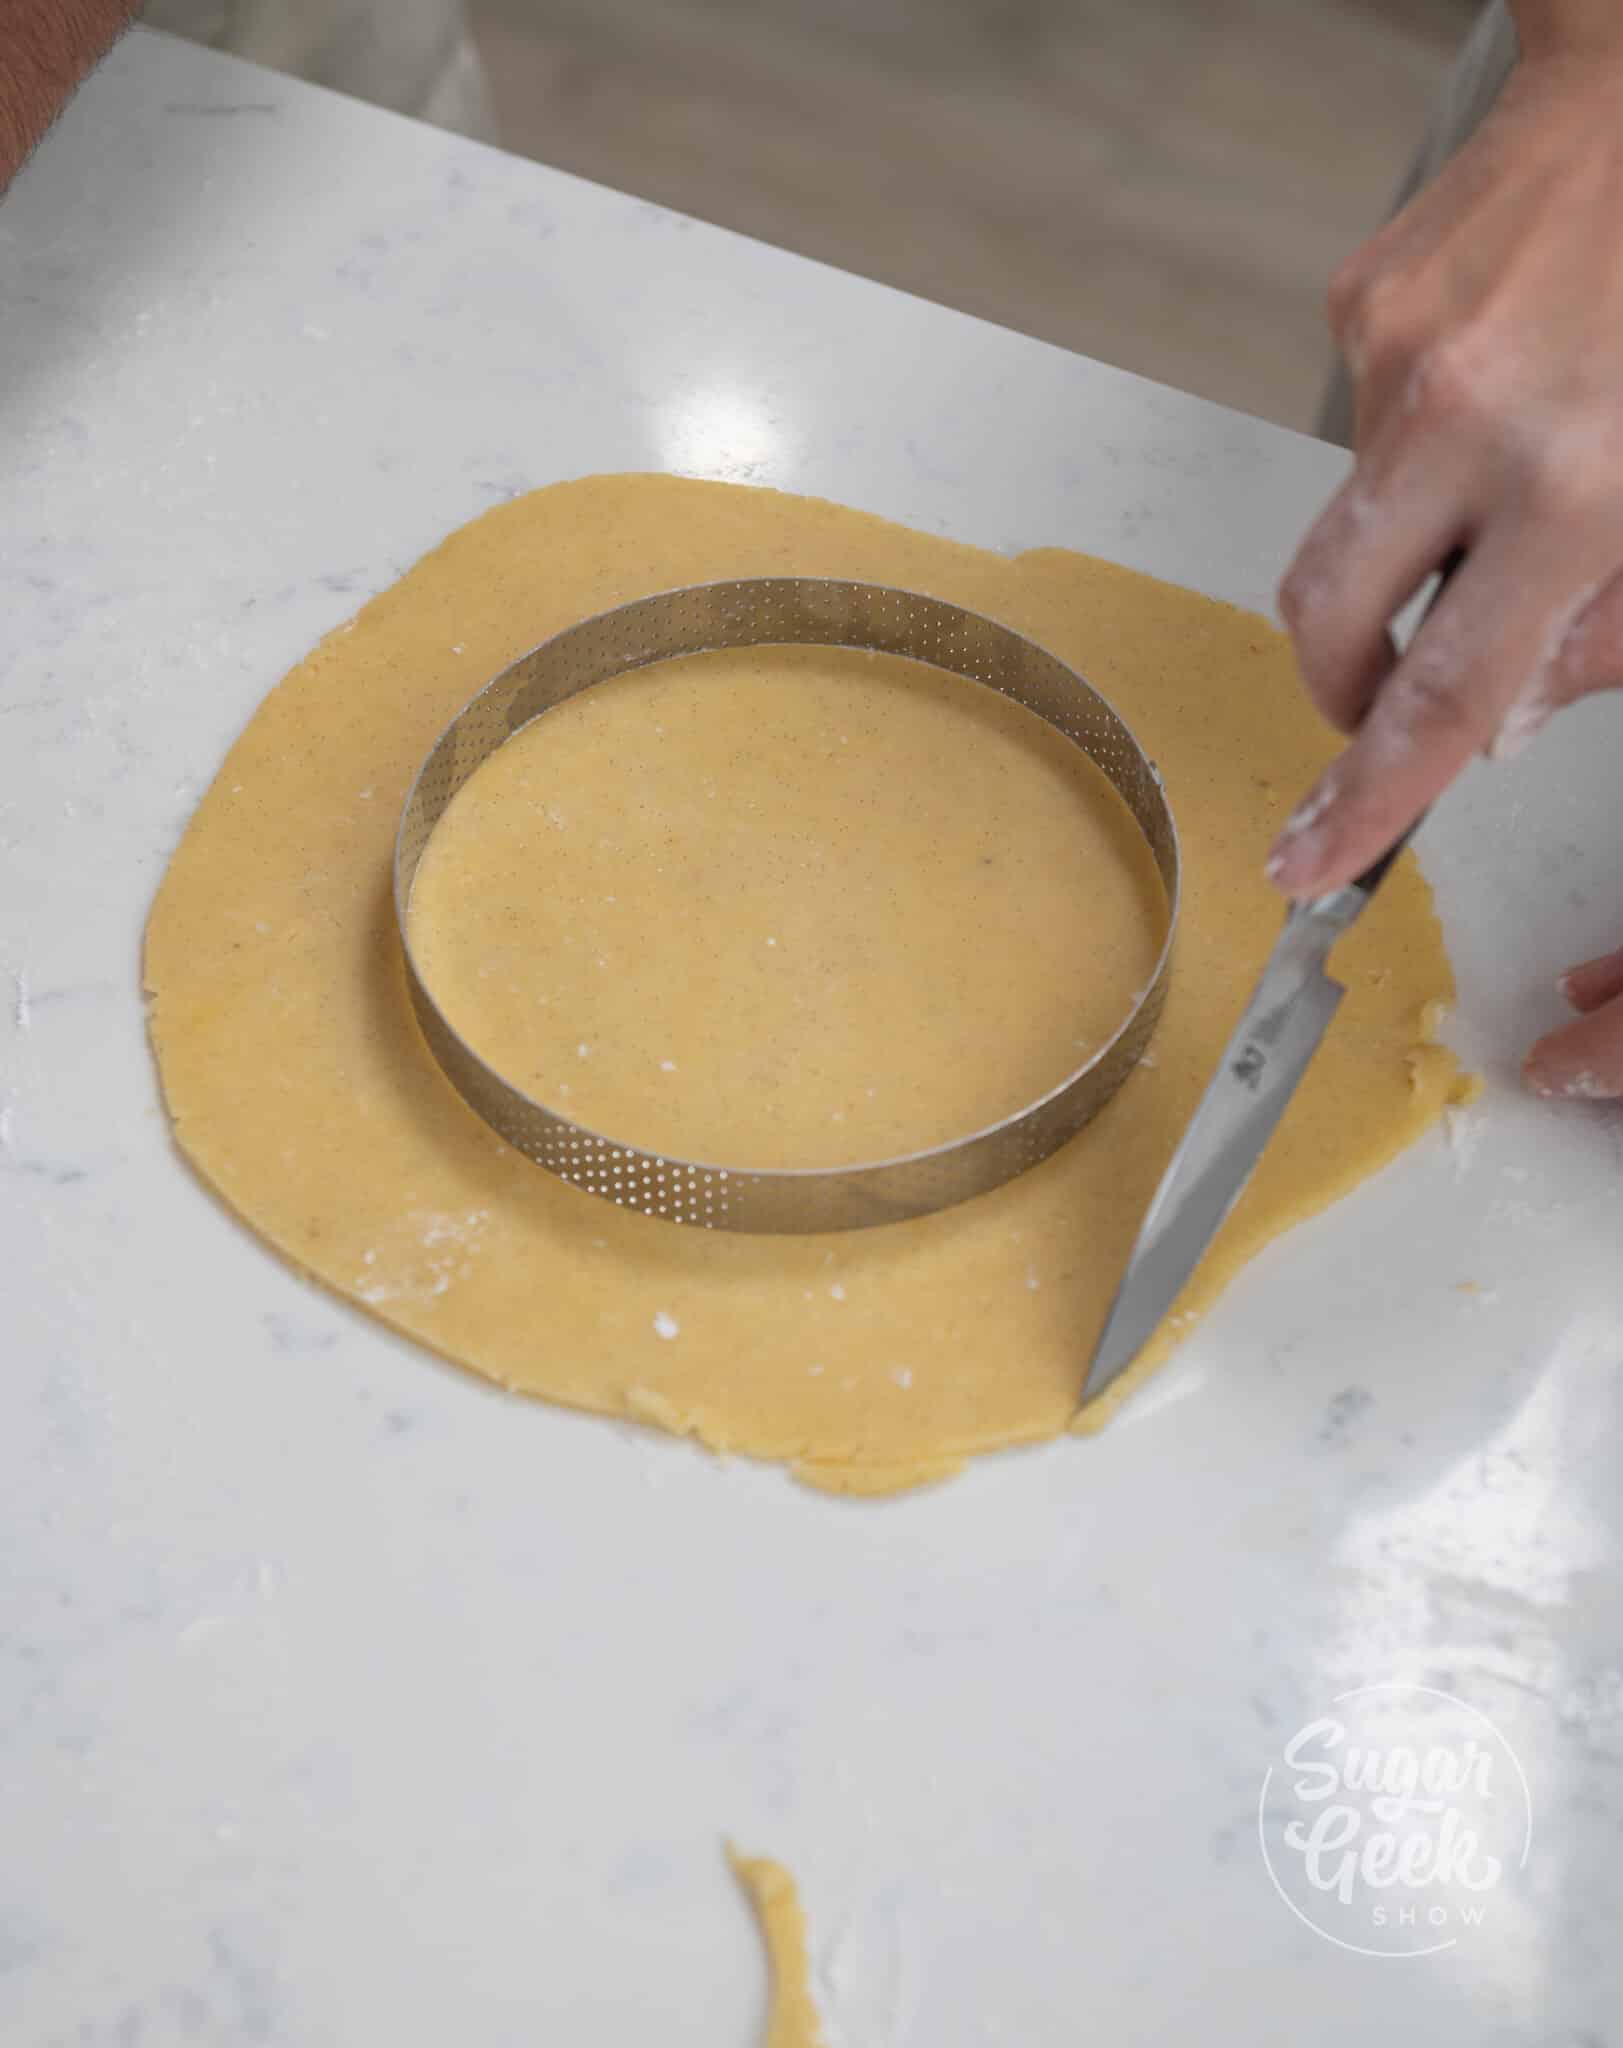 hand using knife to cut circular shape out of tart dough.